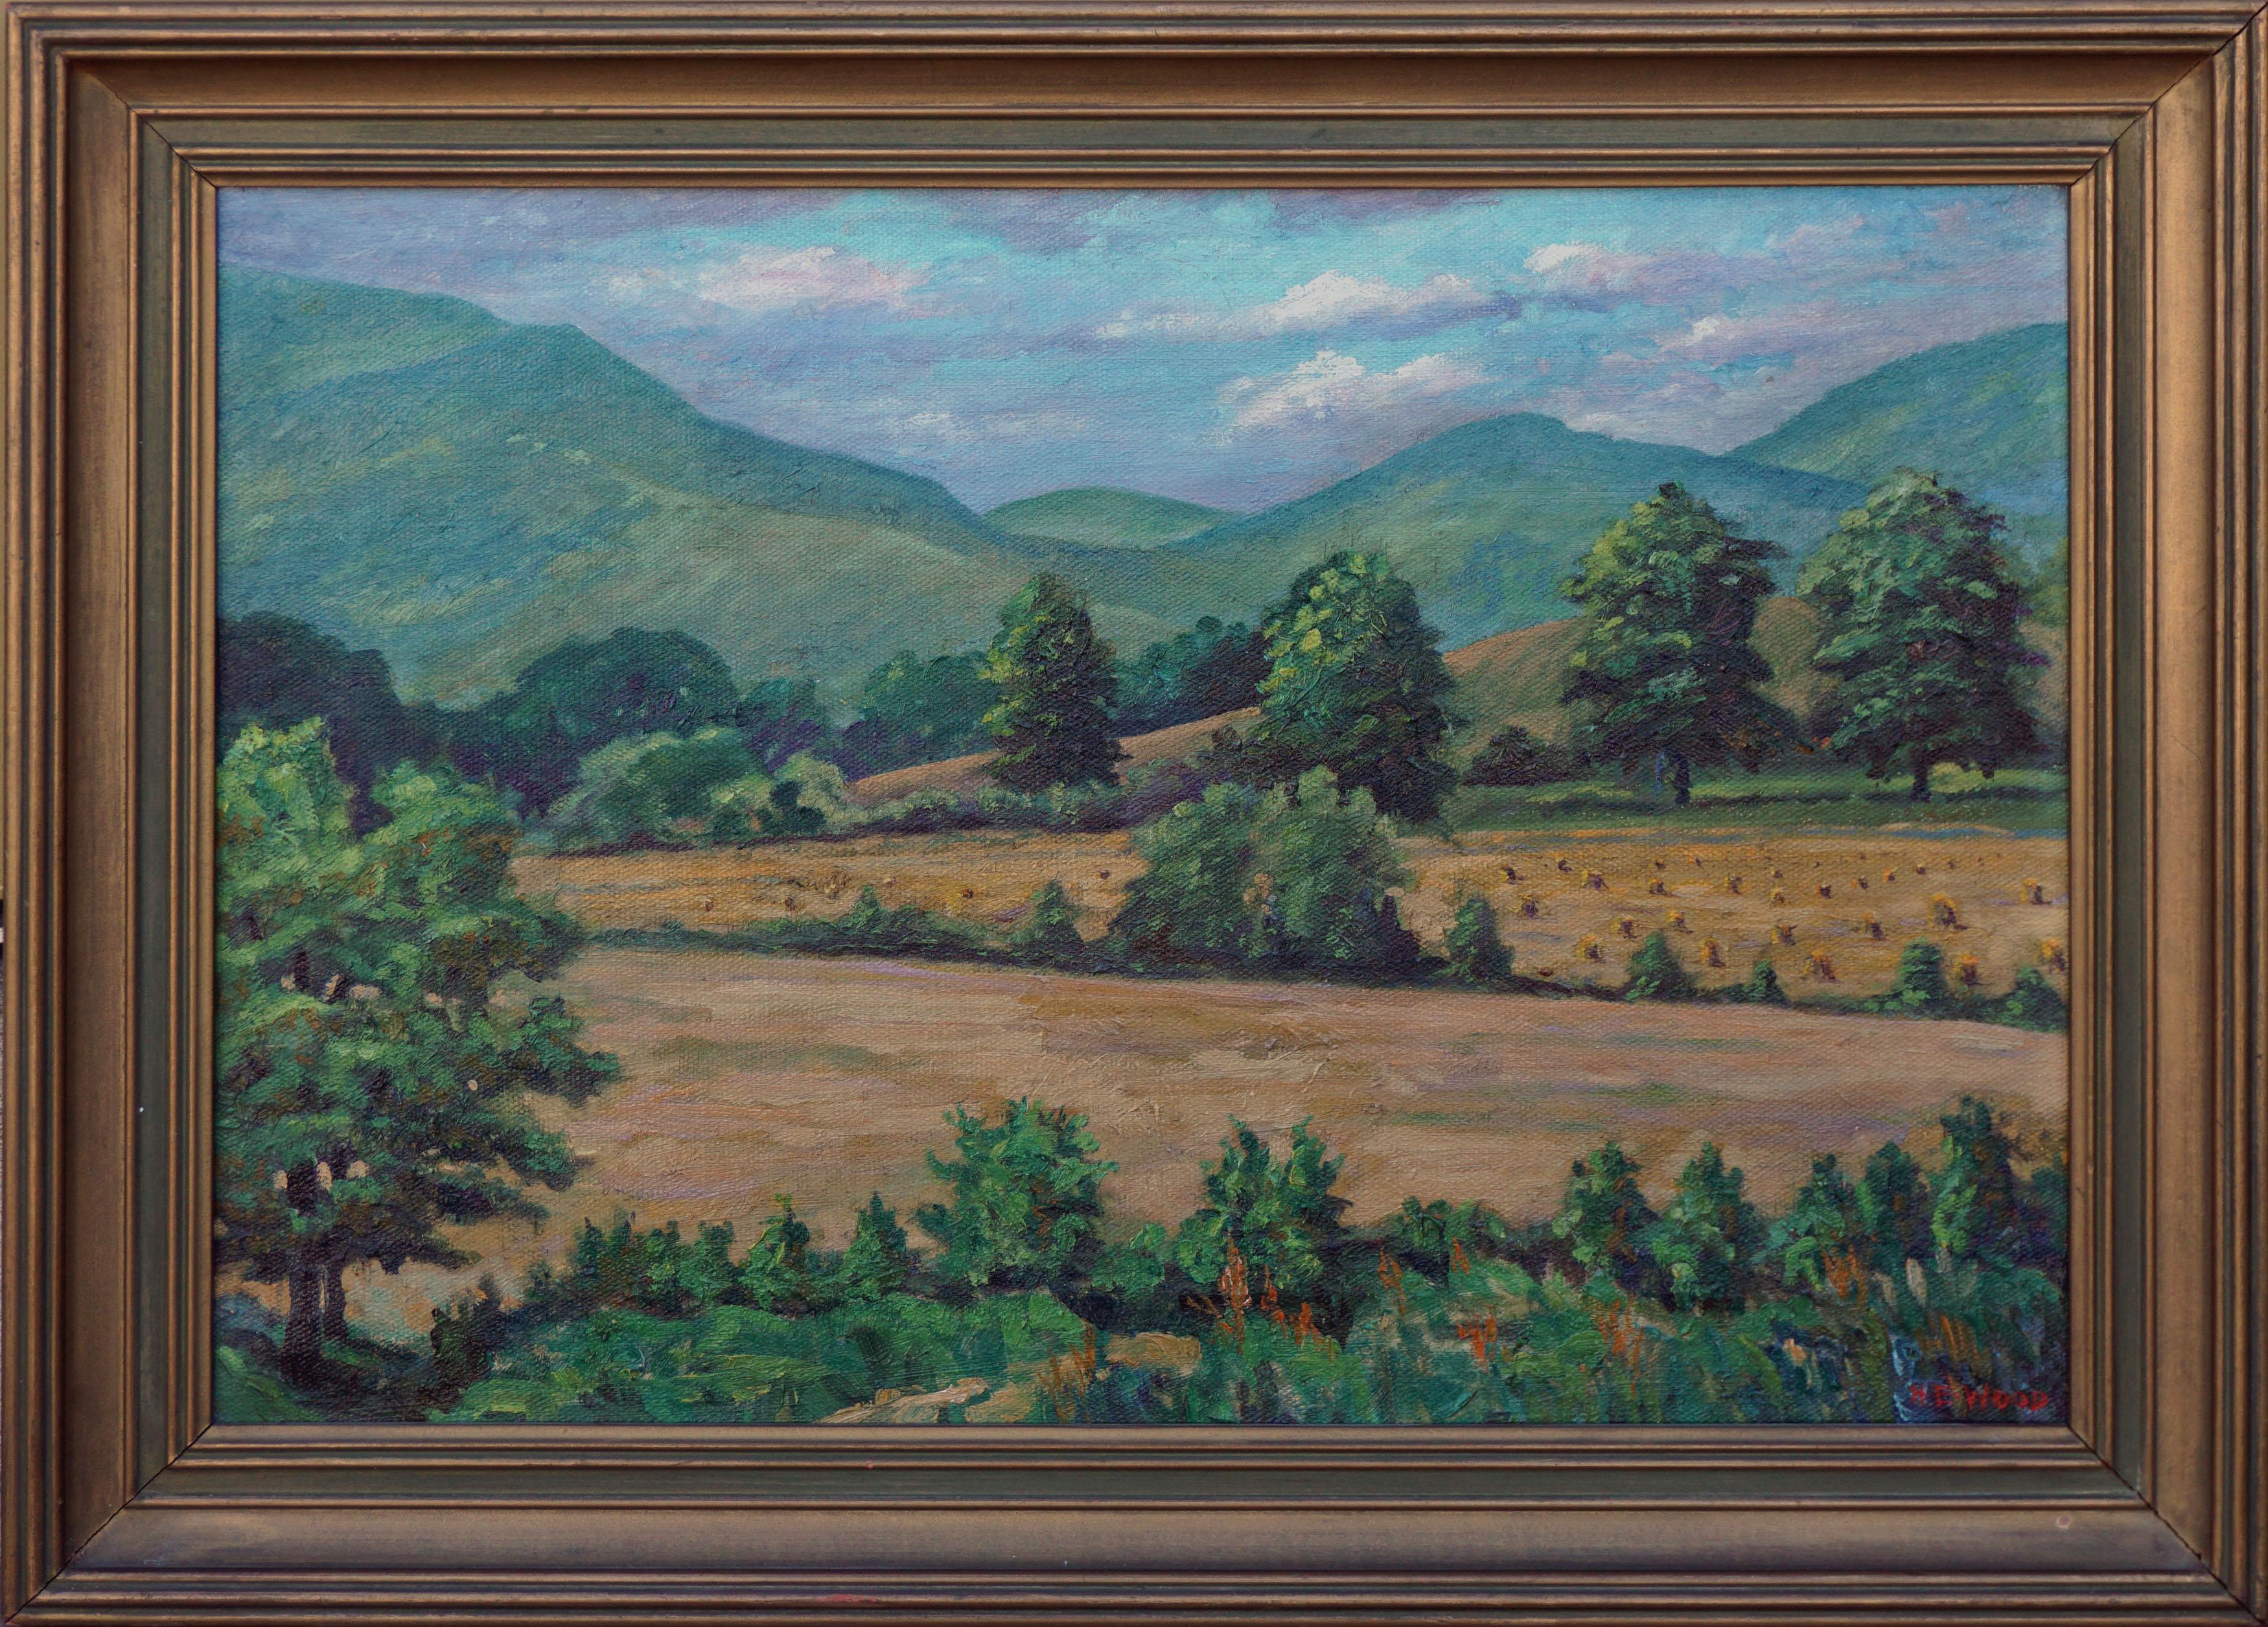 Harry (Emsley) Wood, Sr. Landscape Painting - Mid Century Arts and Craft Hills and Haystacks Landscape